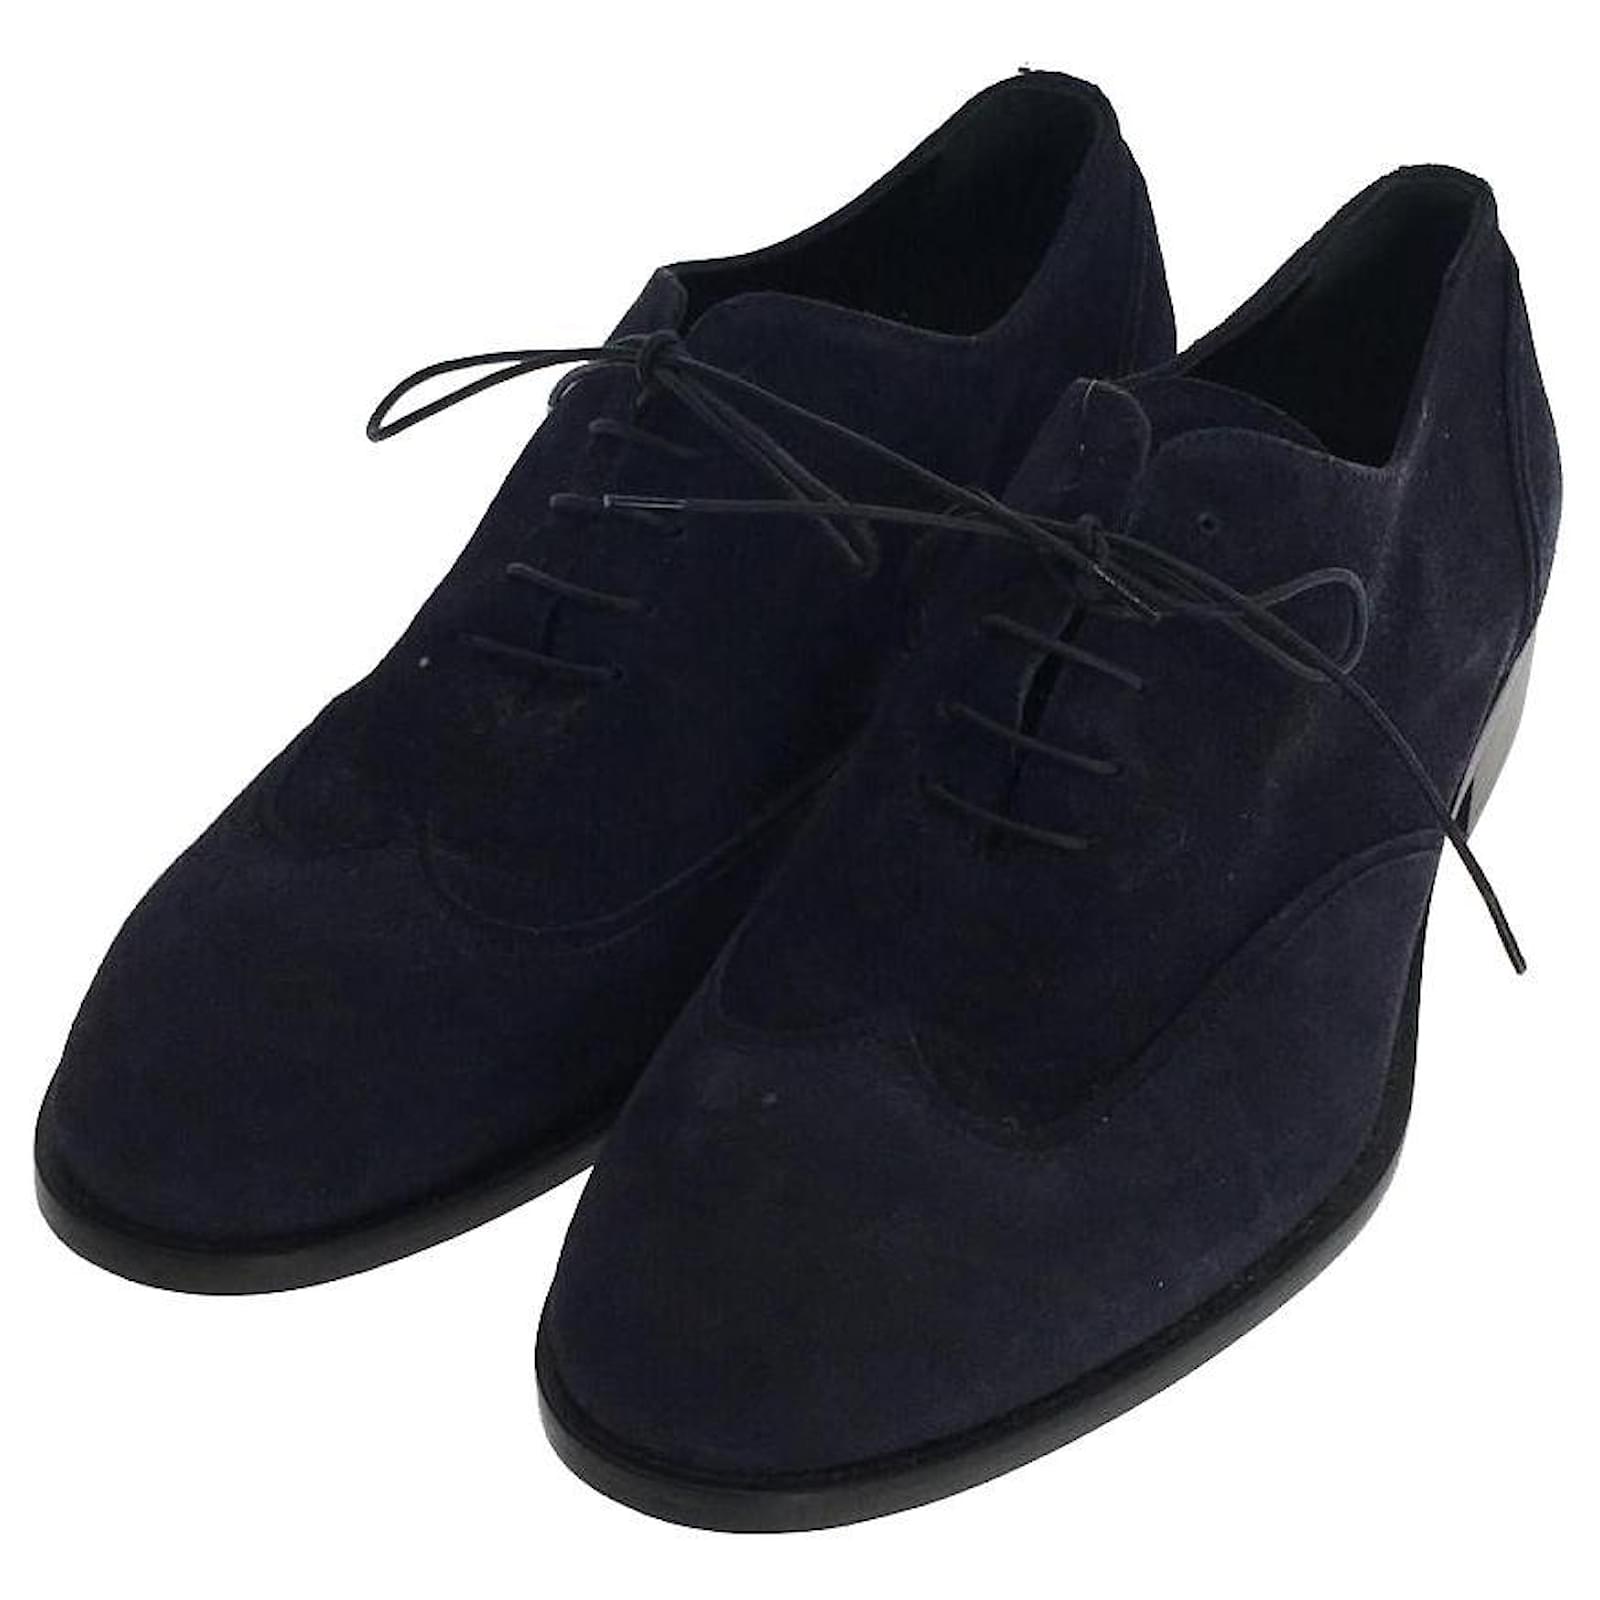 Original Italian leather John galliano shoes